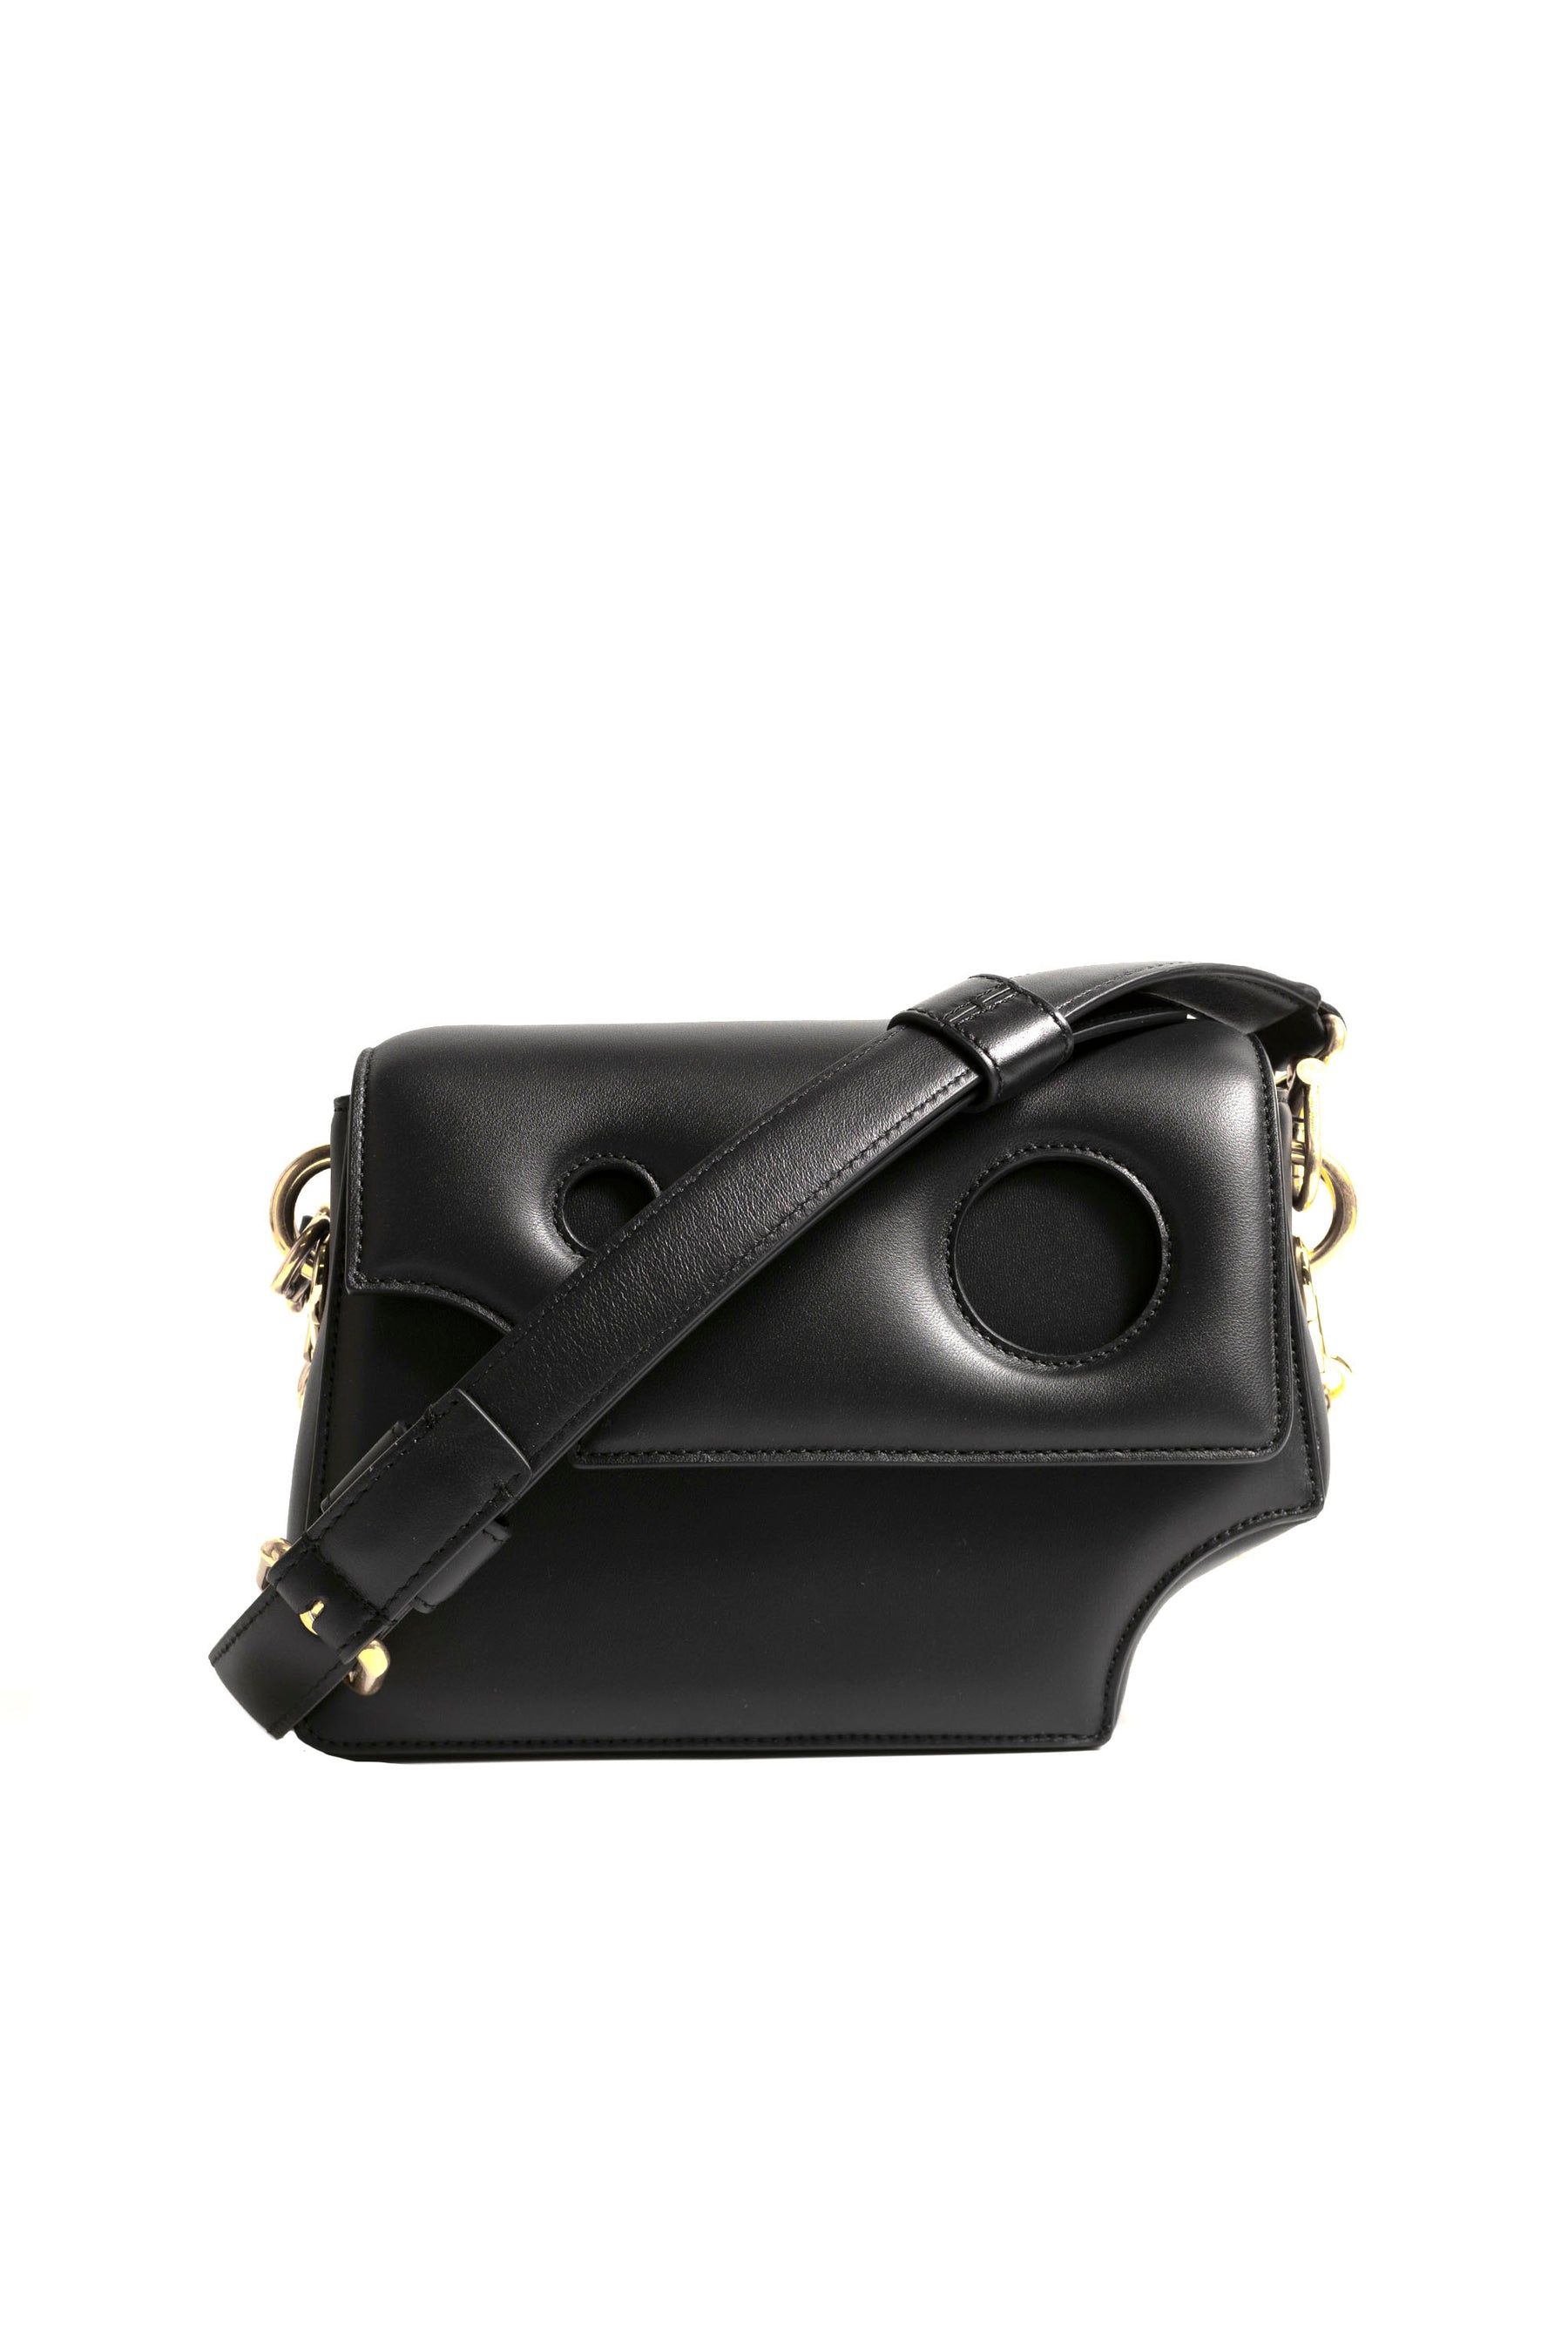 Luxury bag - Burrow 22 shoulder bag in grey leather